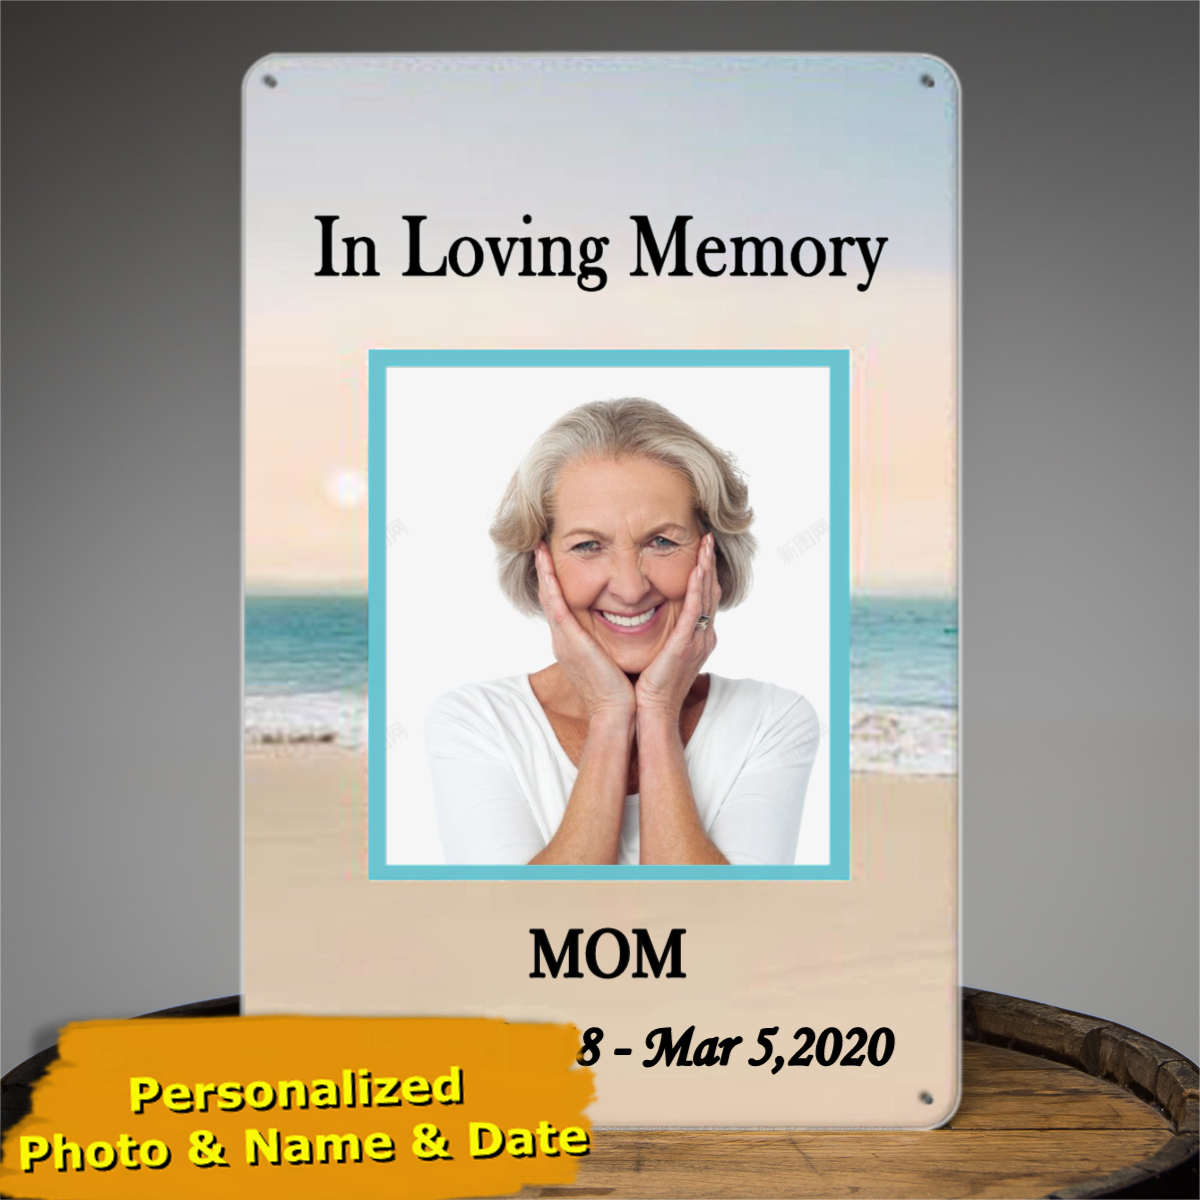 MEMORIAL ブリキ看板、メモリアル メモリアル ブリキ看板、ママ、パパ、祖父母、メモリアル アウトドア ブリキ看板の愛情深い思い出